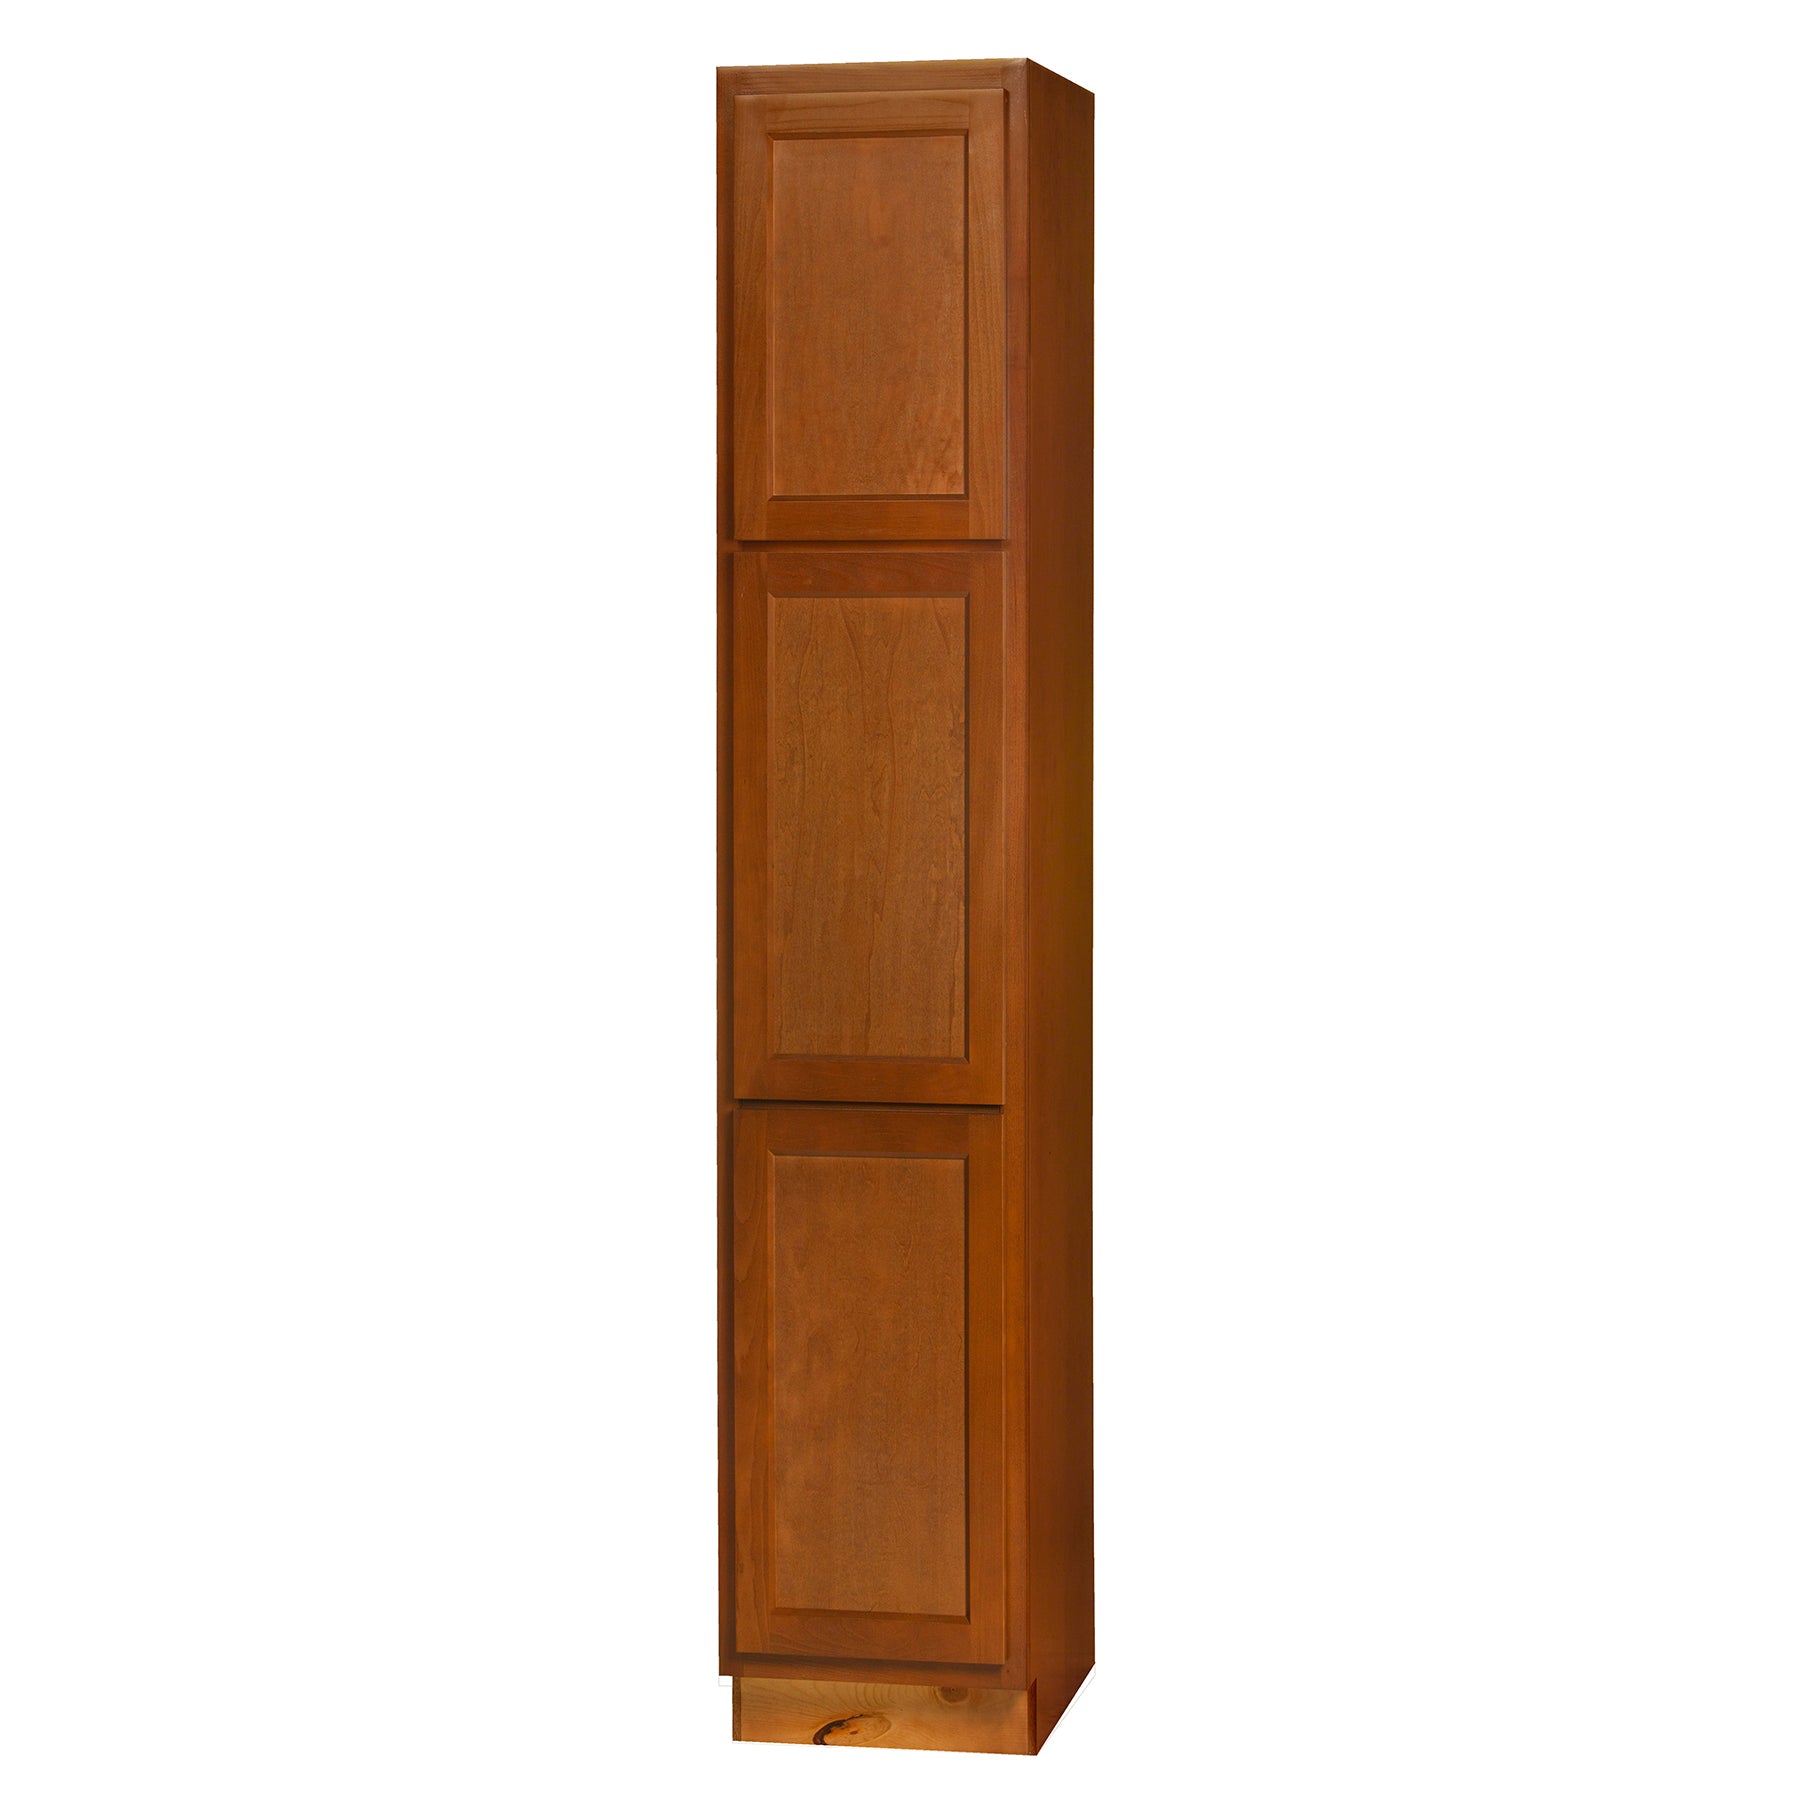 90 inch High Broom Cabinet - Glenwood Shaker - 18 Inch W x 90 Inch H x 12 Inch D